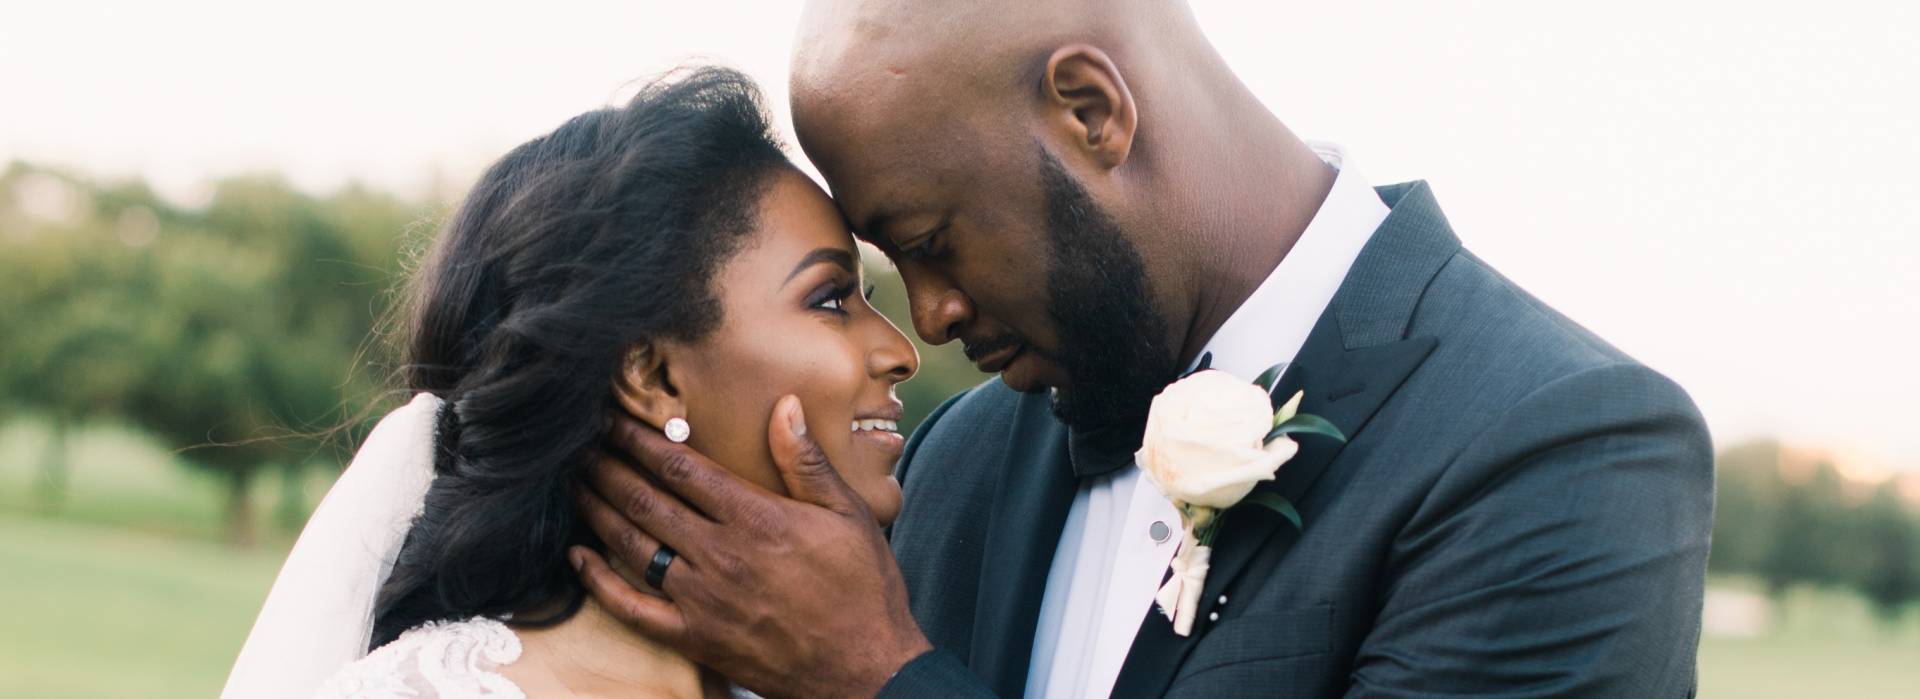 unity through community black couple on their wedding day